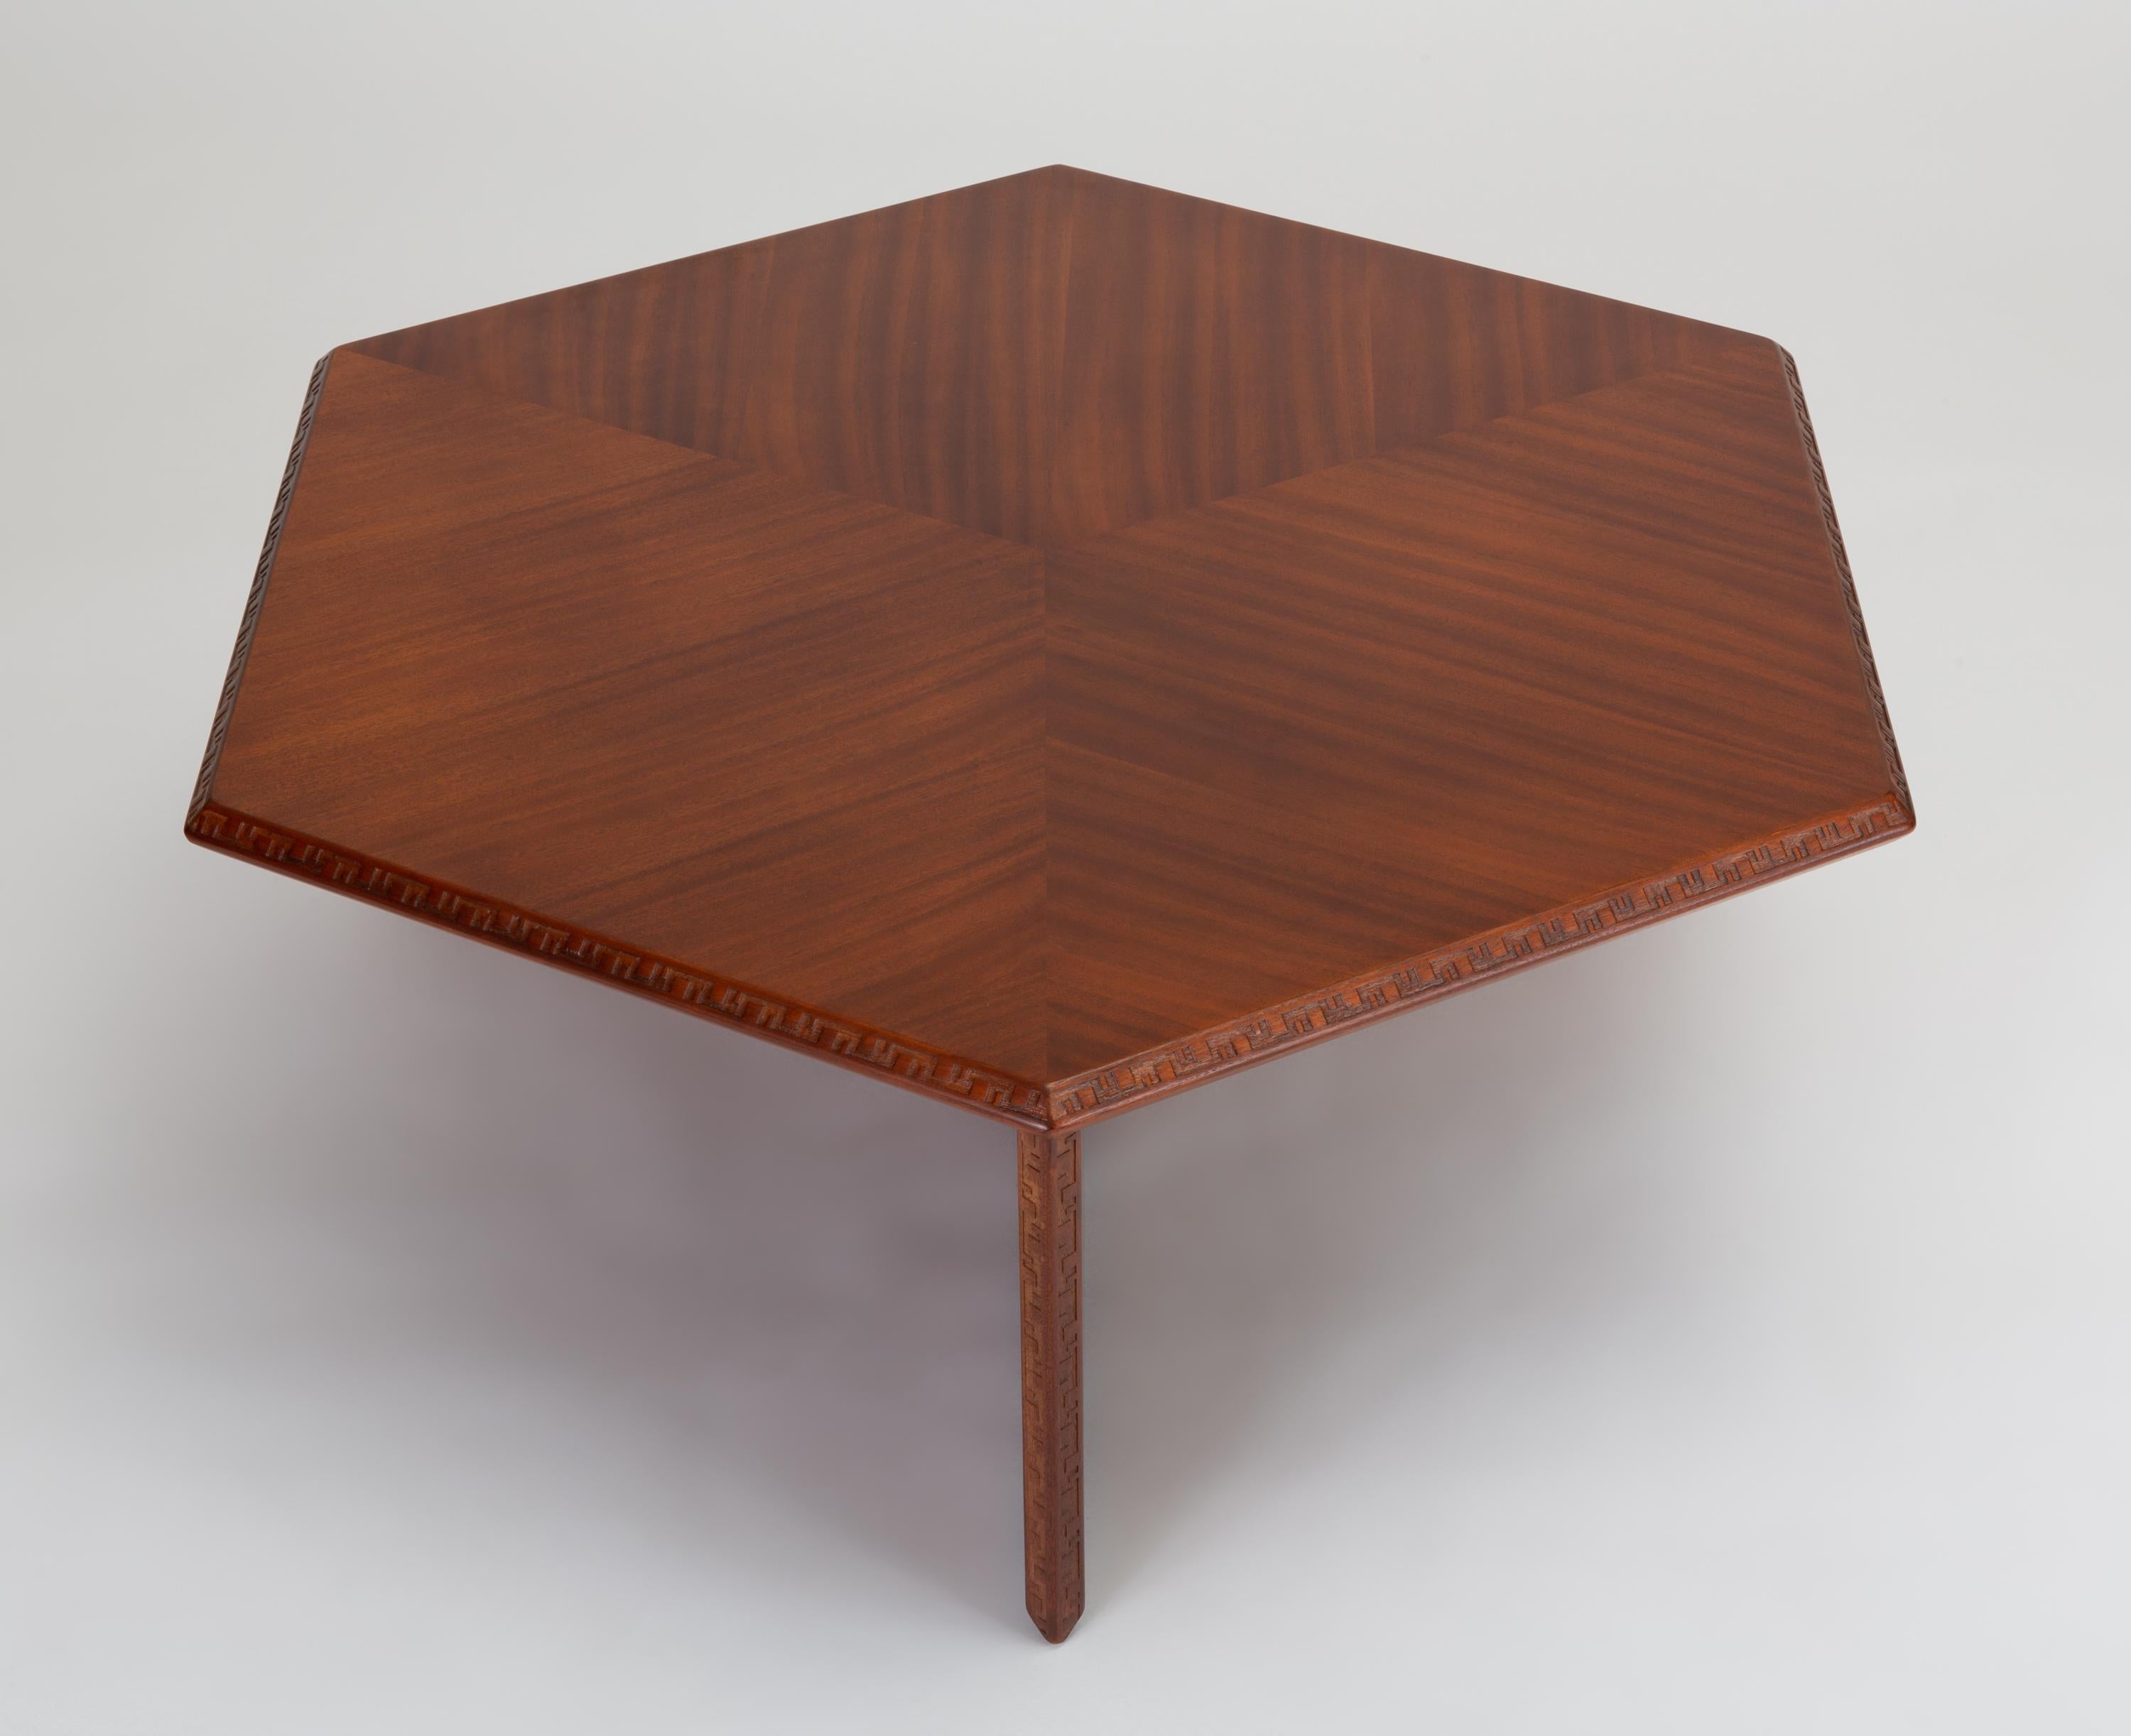 Frank Lloyd Wright “Taliesin” Coffee Table for Heritage-Henredon (Prairie School)